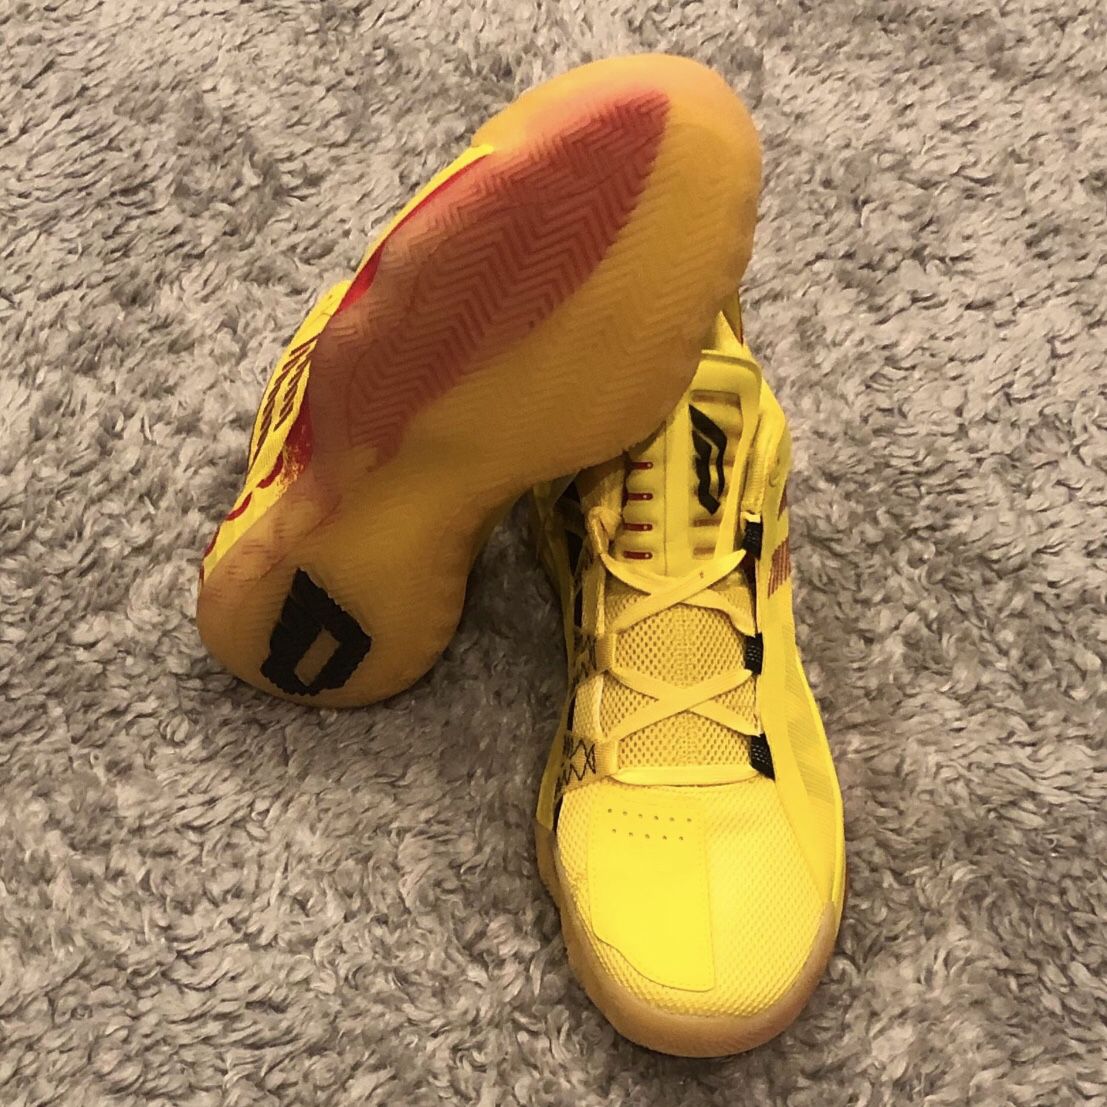 Adidas Dame Damian Lillard 6 Hot Rod Basketball Shoes Size 11.5